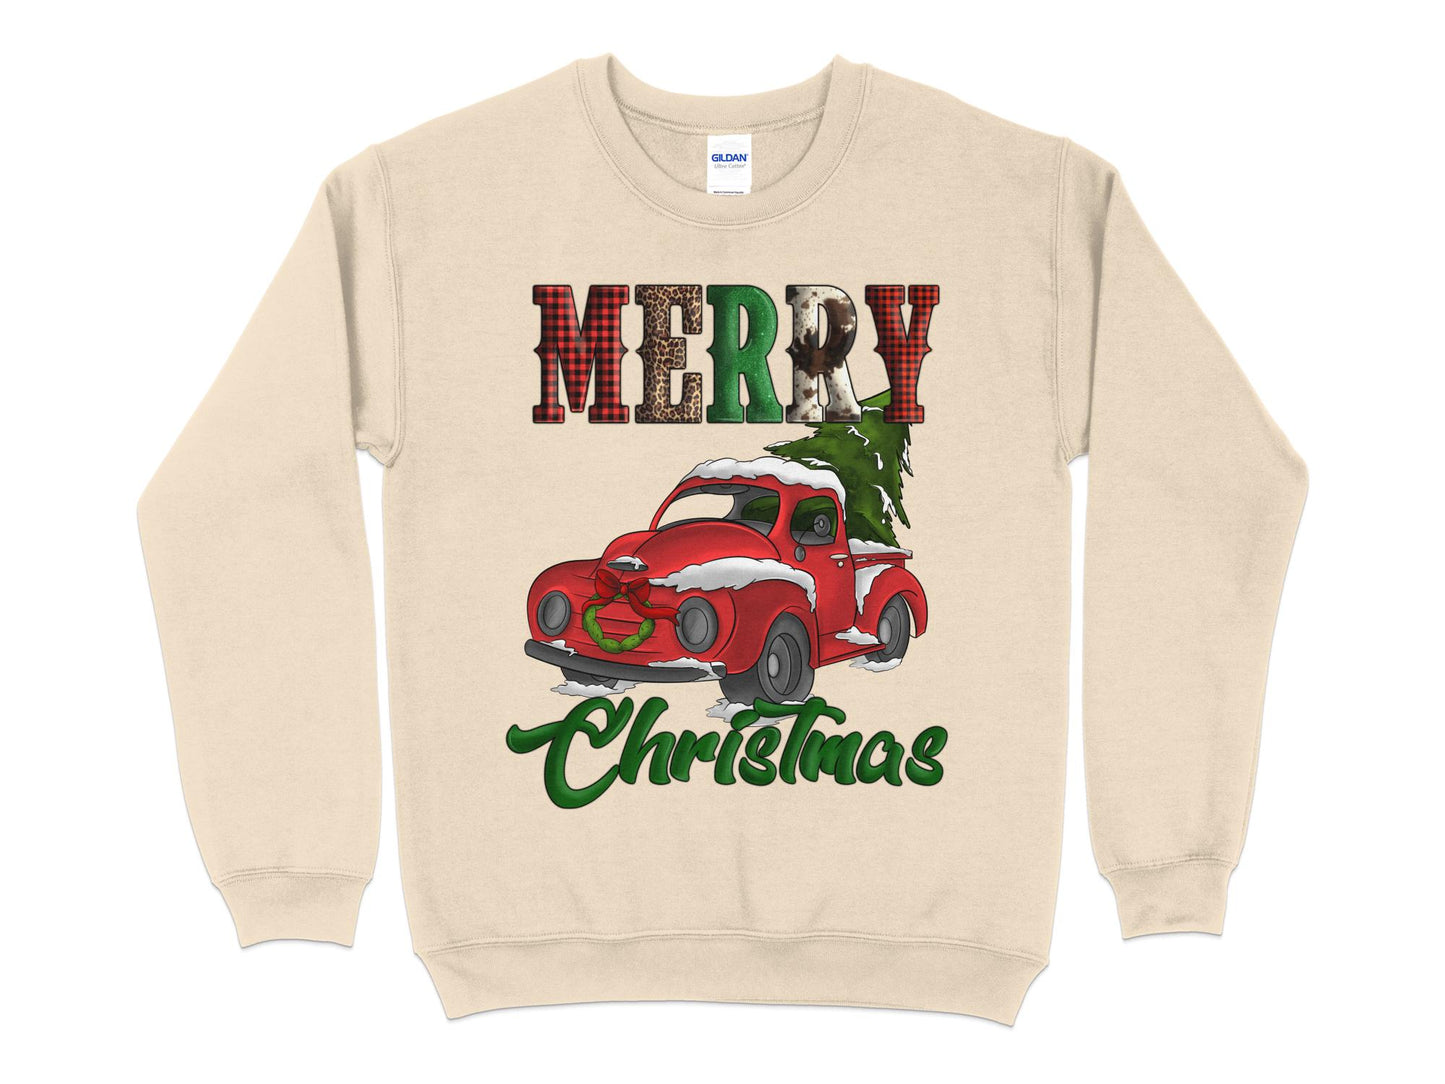 Merry Christmas Red Truck Cow Leopard Buffalo Print Sweatshirt, Christmas Sweater - Mardonyx Sweatshirt S / Sand